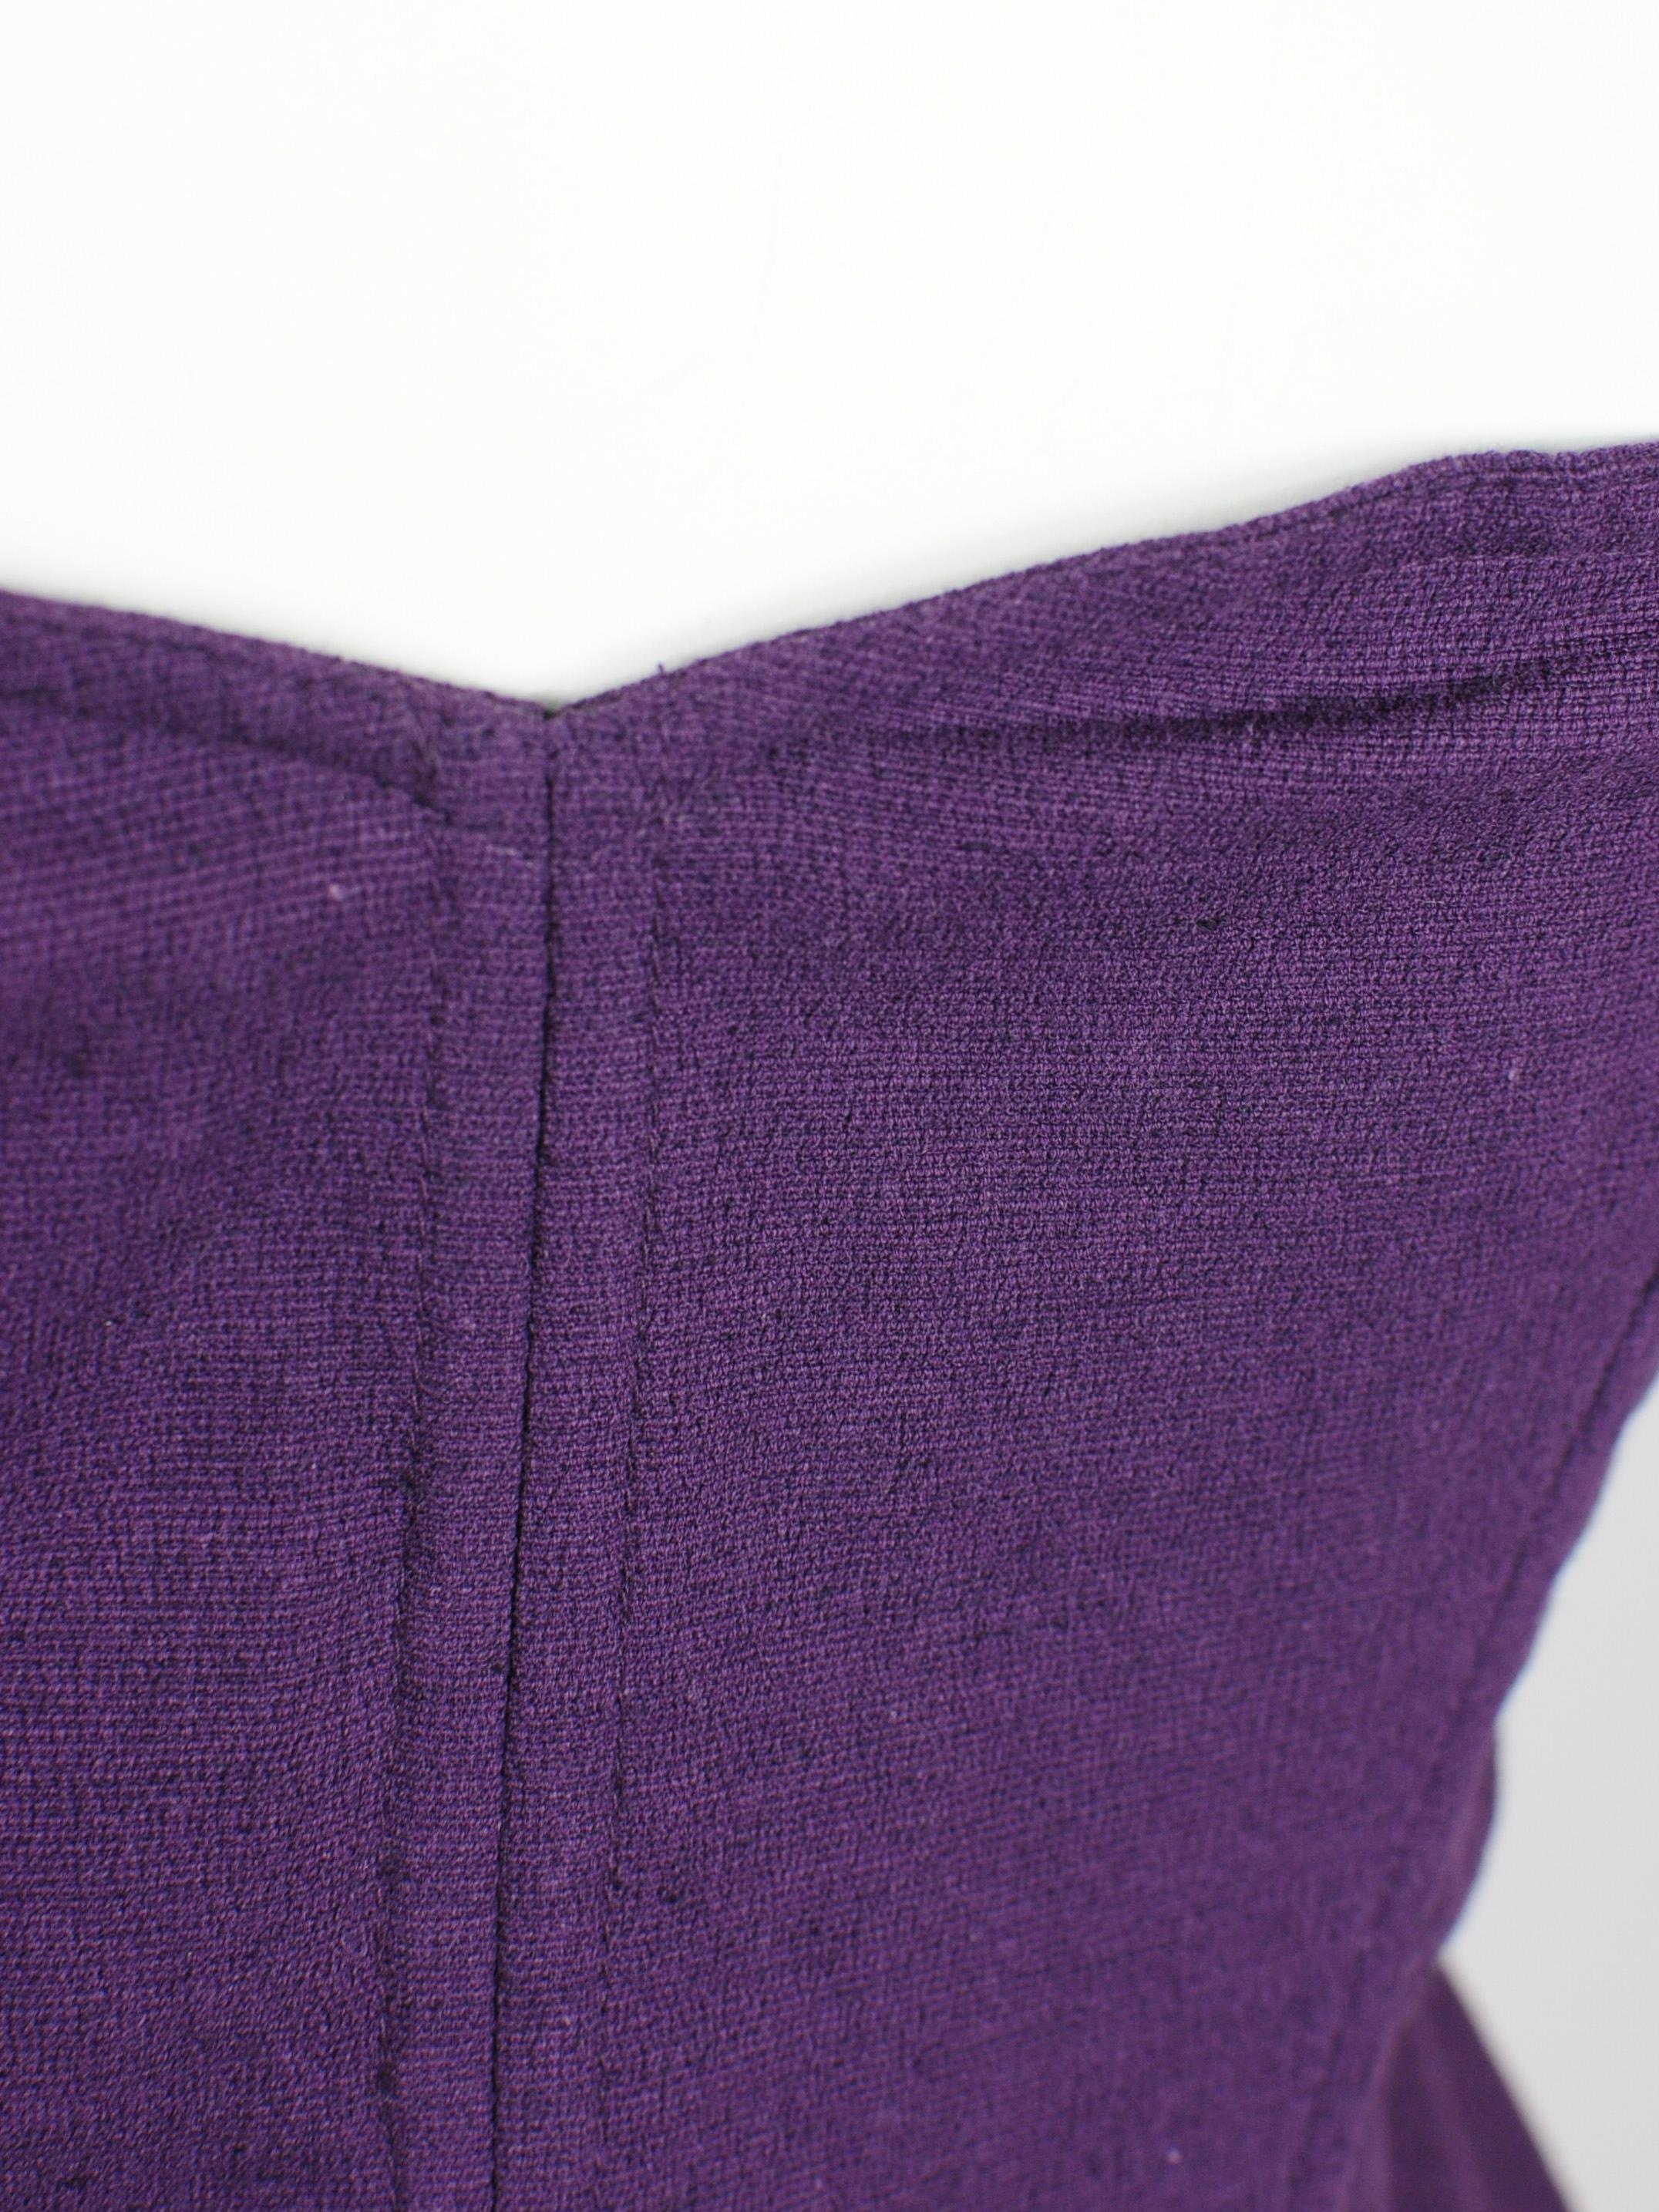 La Perla Corset NWT Deadstock Purple Linen Blend Zipper Peplum Shape 1990s For Sale 2